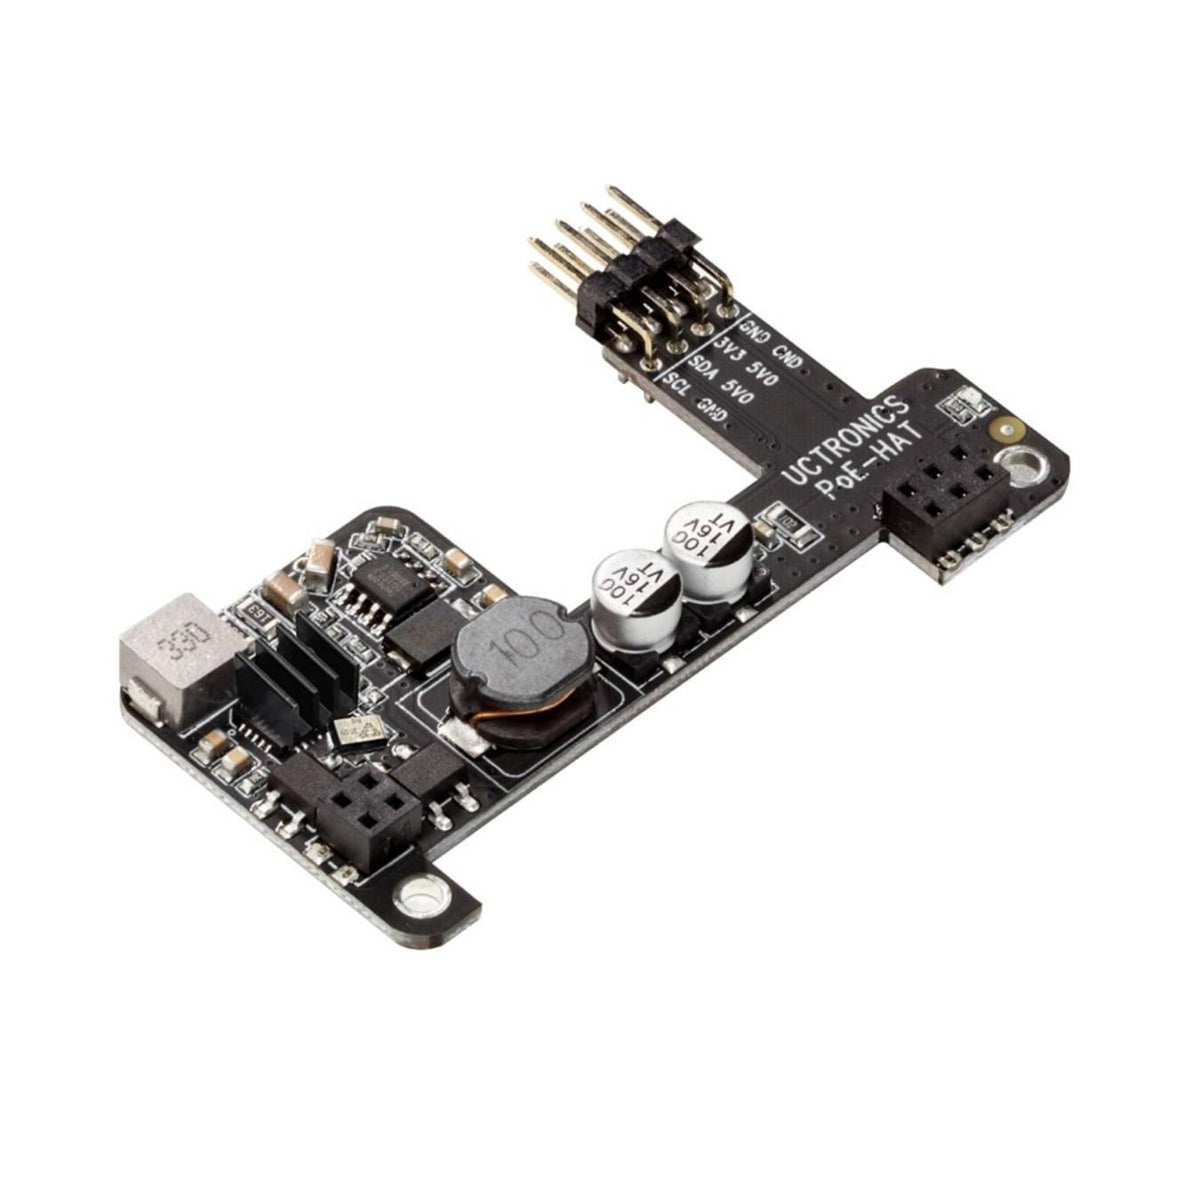 40-pin GPIO Extension Board for Raspberry Pi 2/B+ - RobotShop